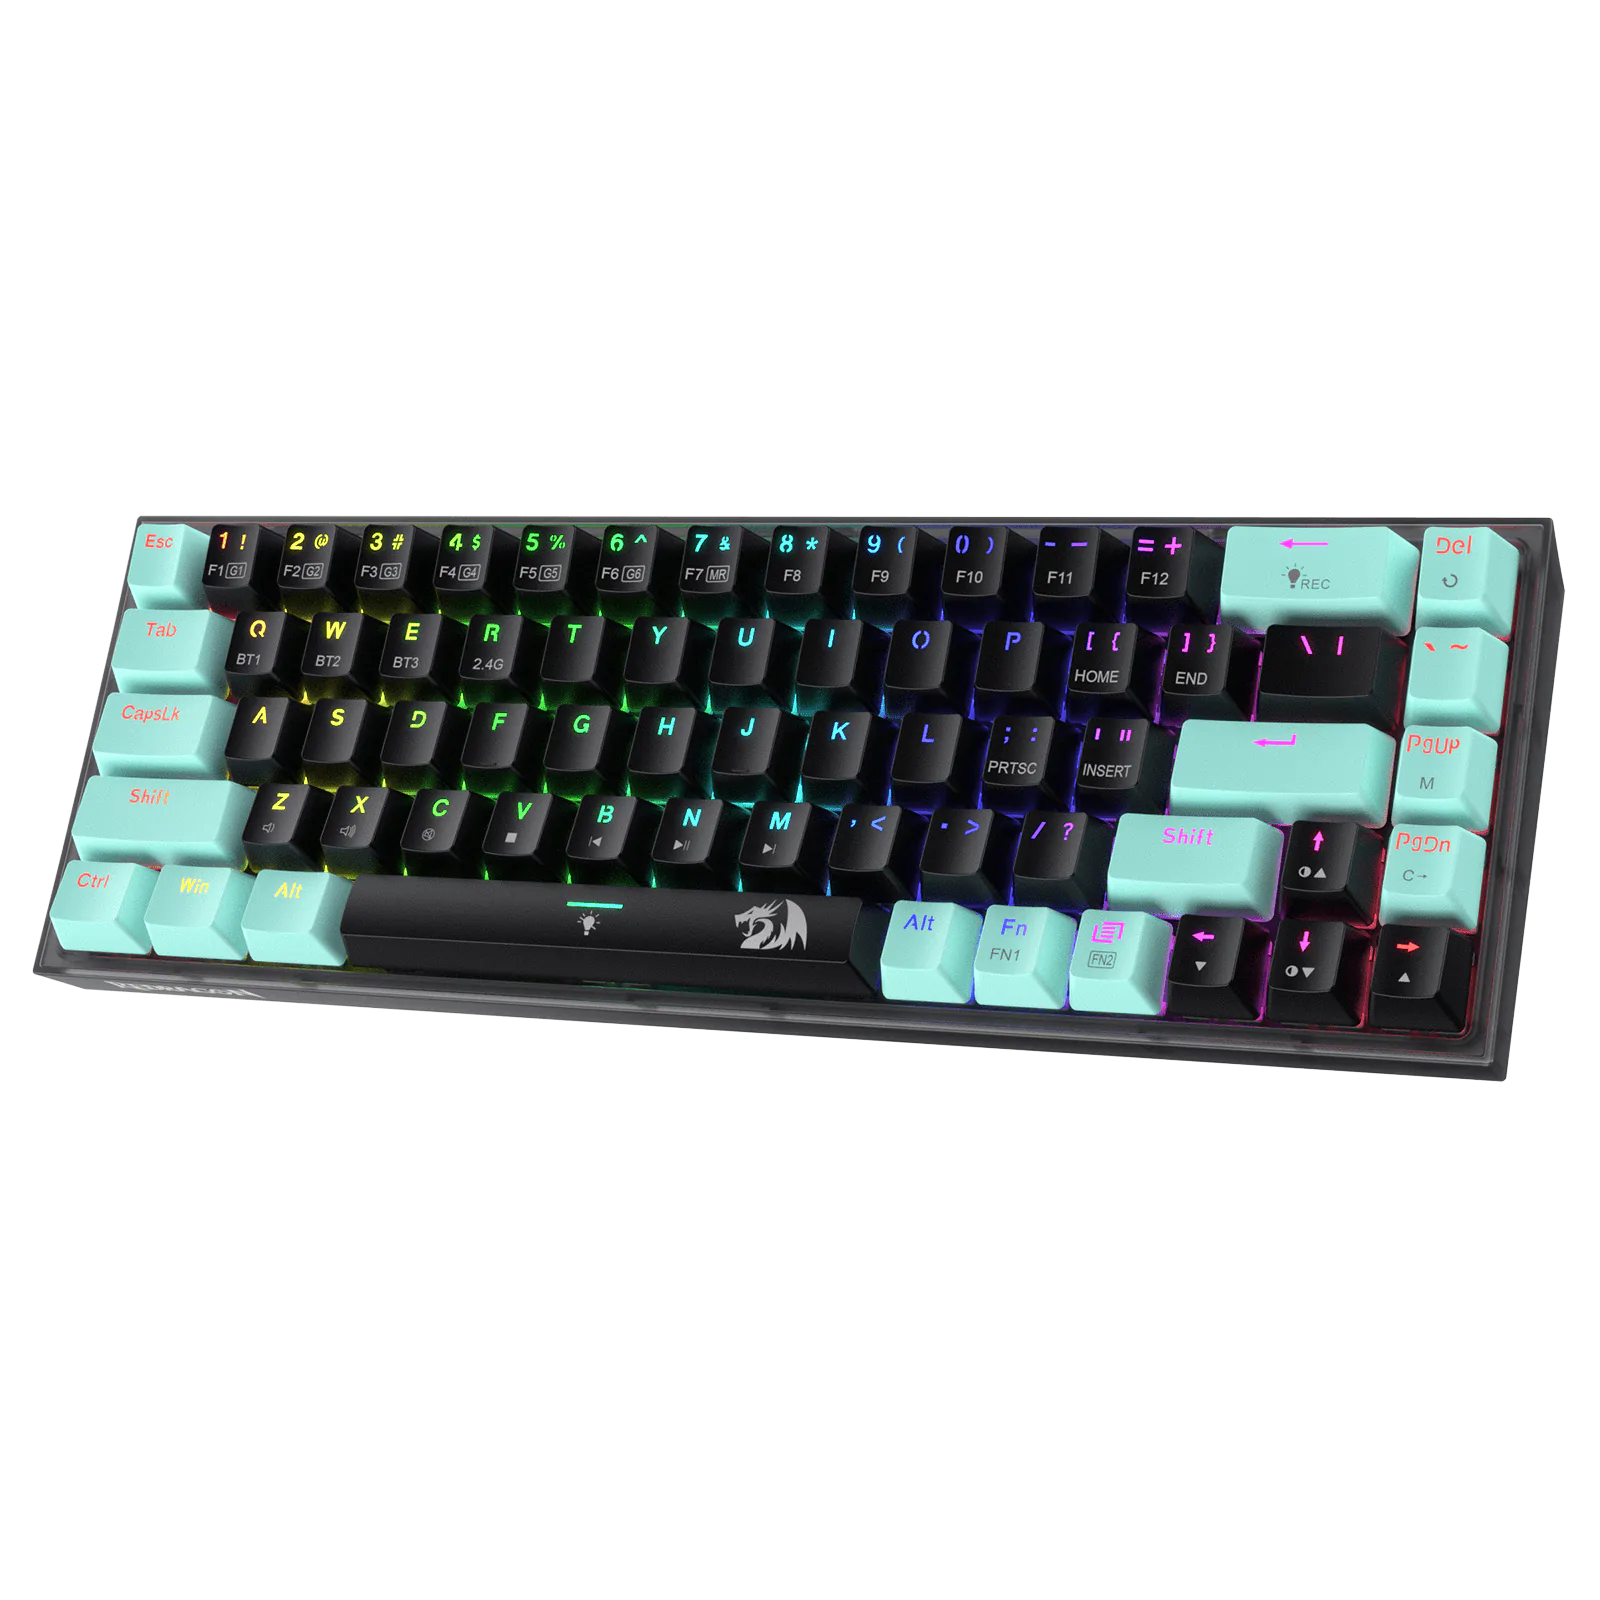 Redragon K631 PRO SE 65% 3-Mode Wireless RGB Gaming Keyboard, 68 Keys Hot-Swappable Compact Mechanical Keyboard w/Hot-Swap Free-Mod PCB Socket